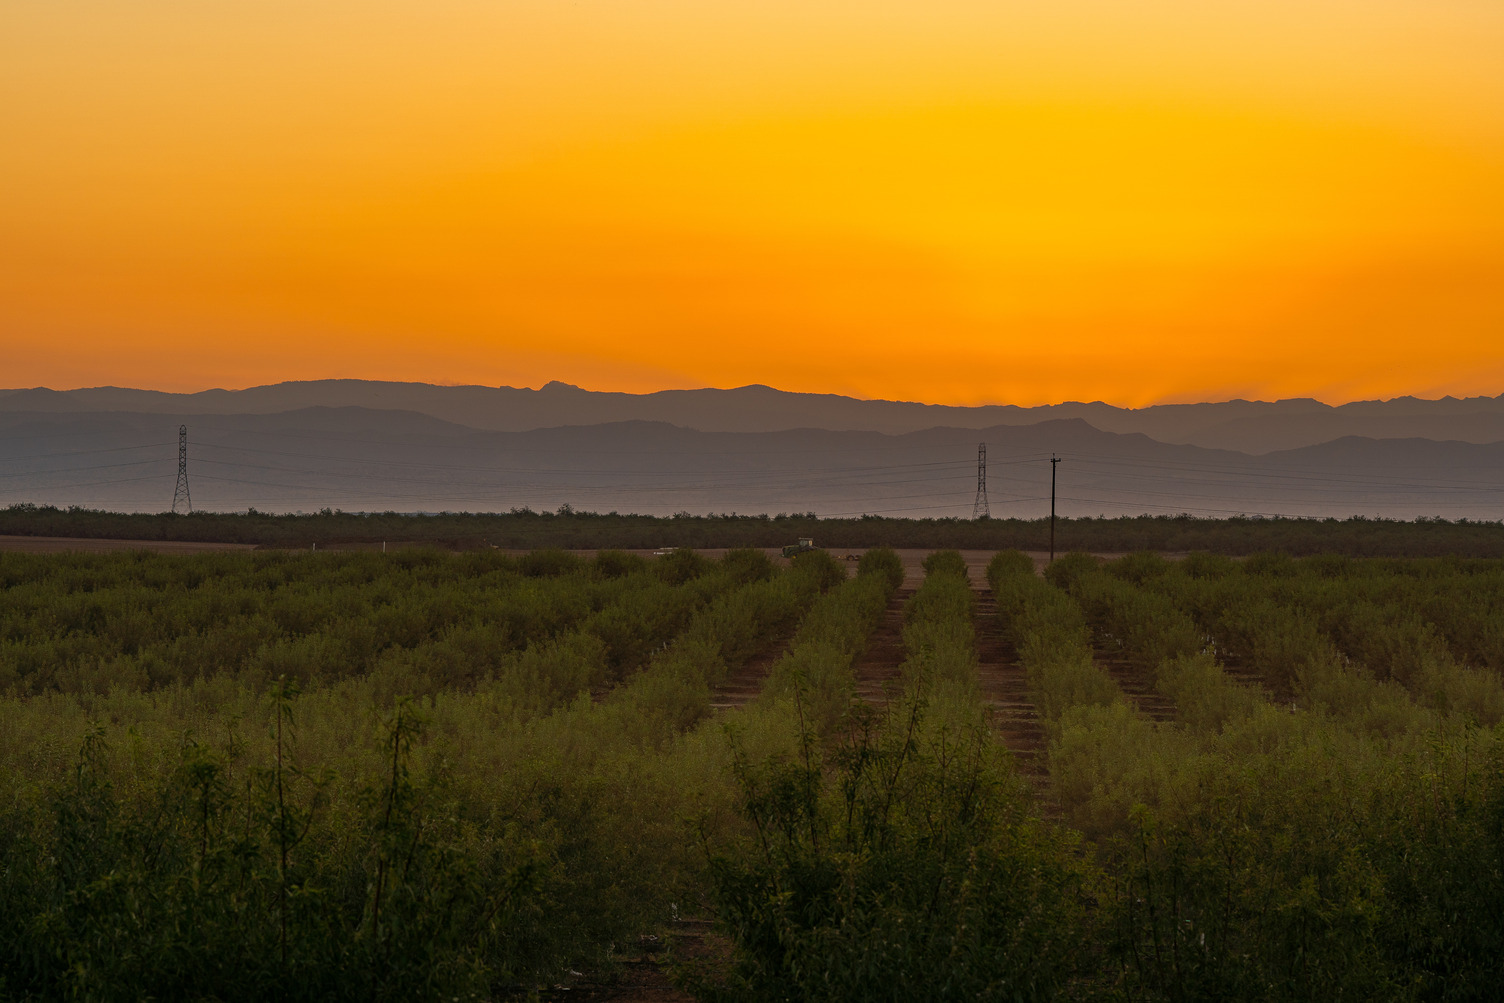 California Almond Acreage Drops in 2022 – First Time in Decades